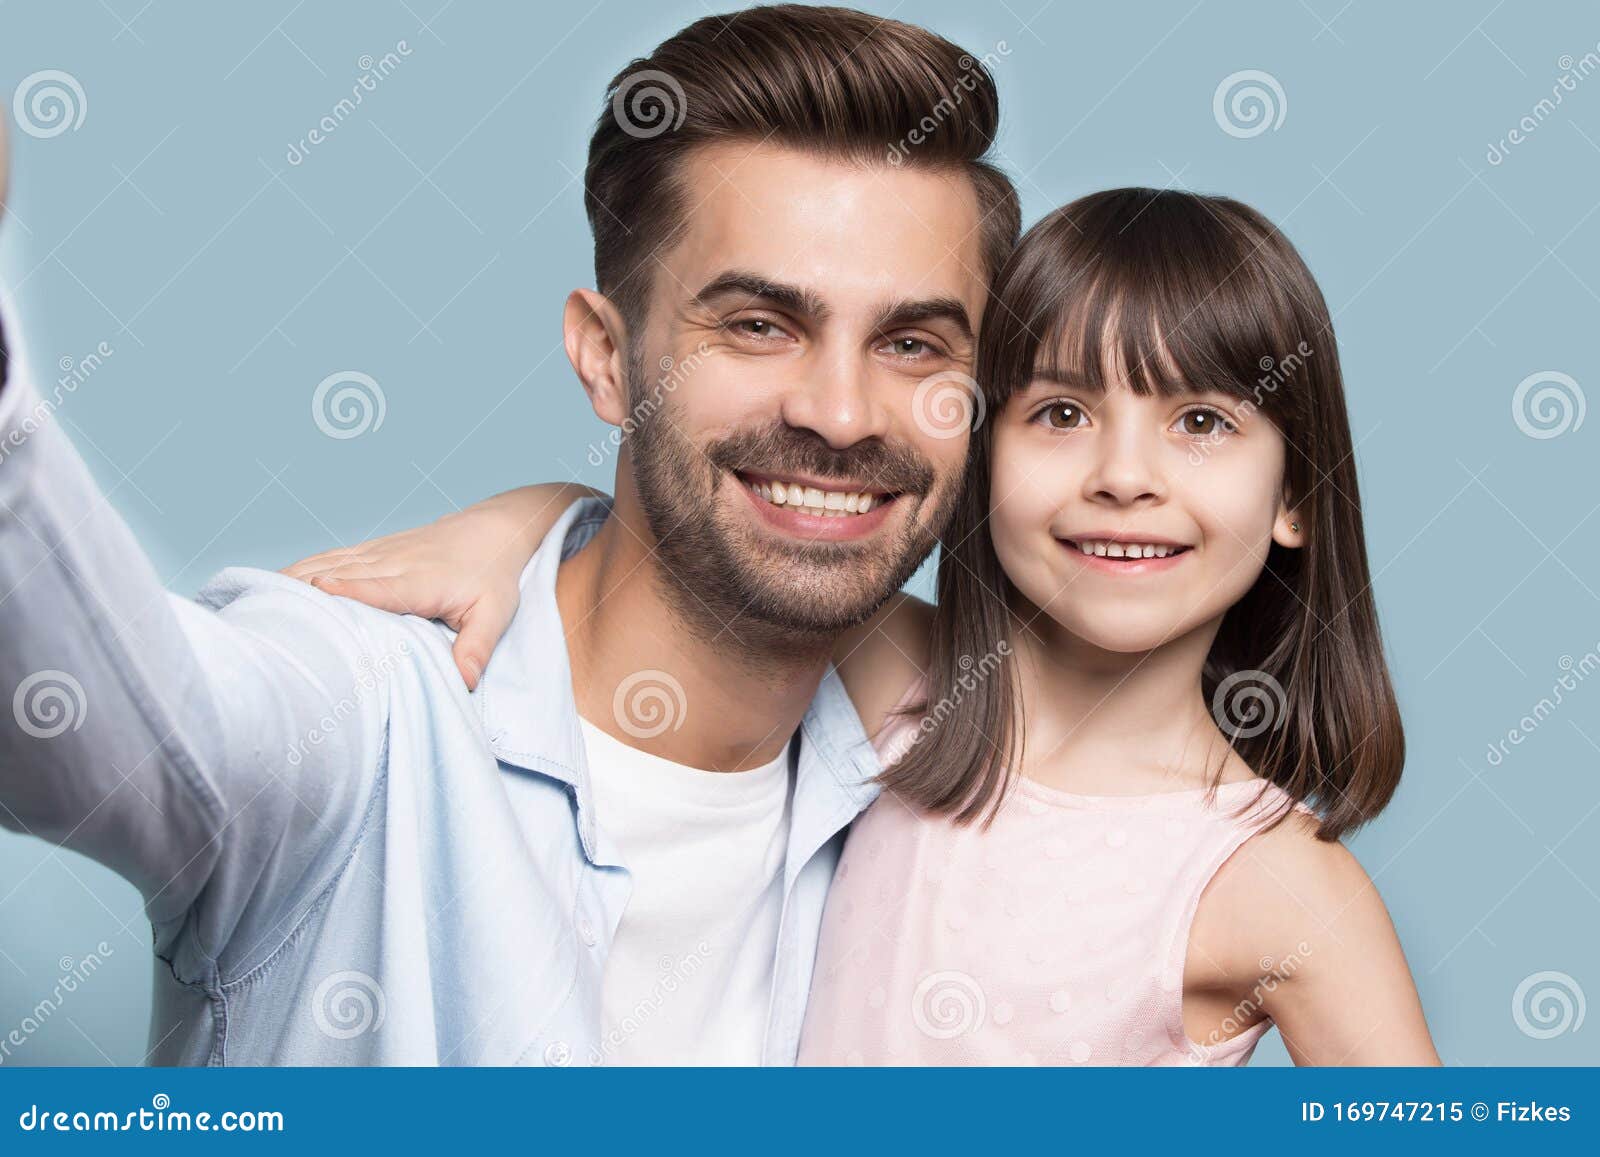 selfie sister dotor and dad sex scene